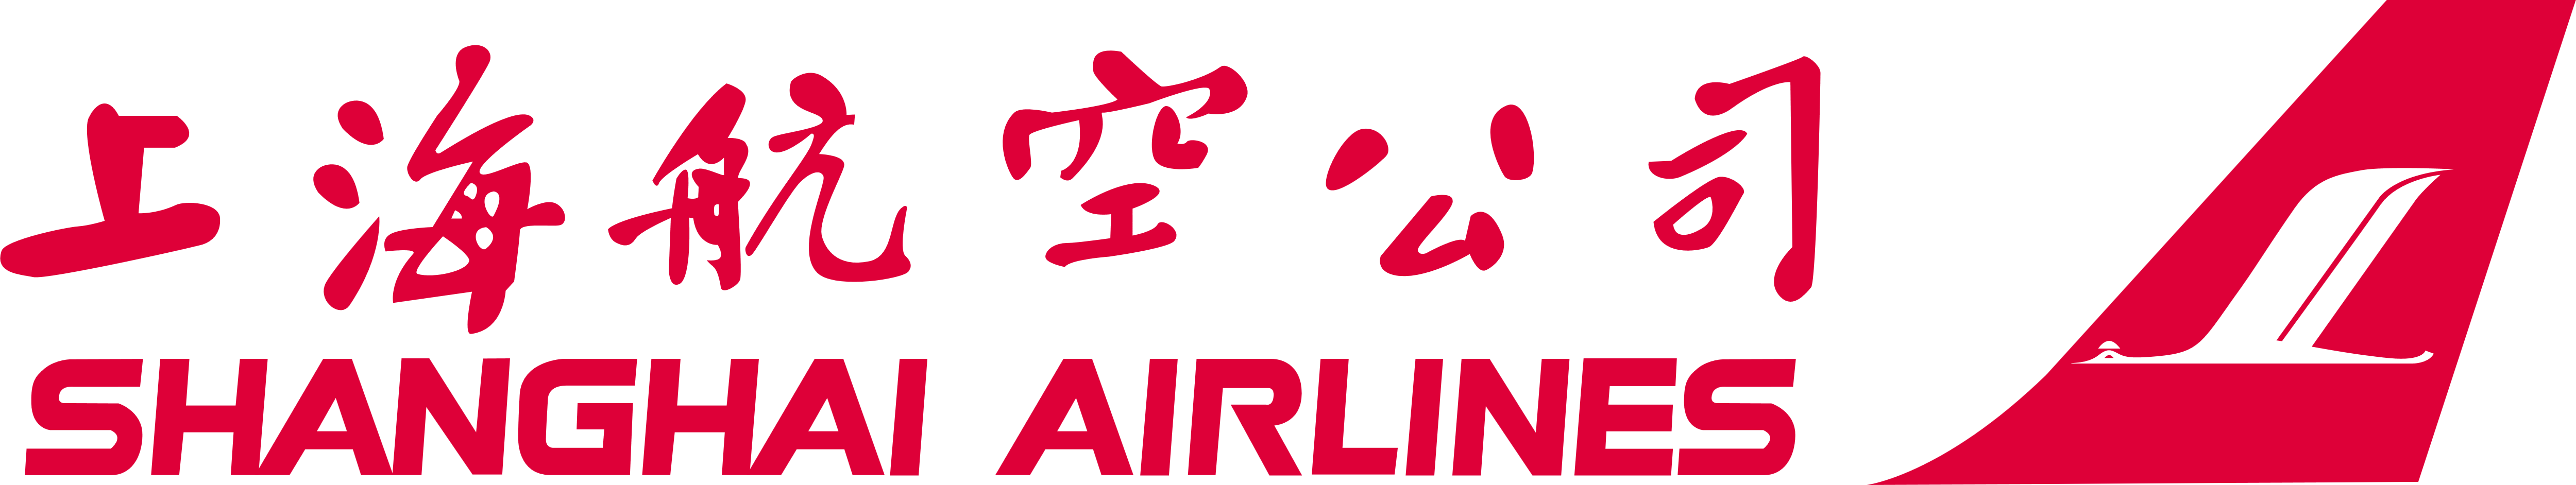 Shanghai Airlines Brand Logo